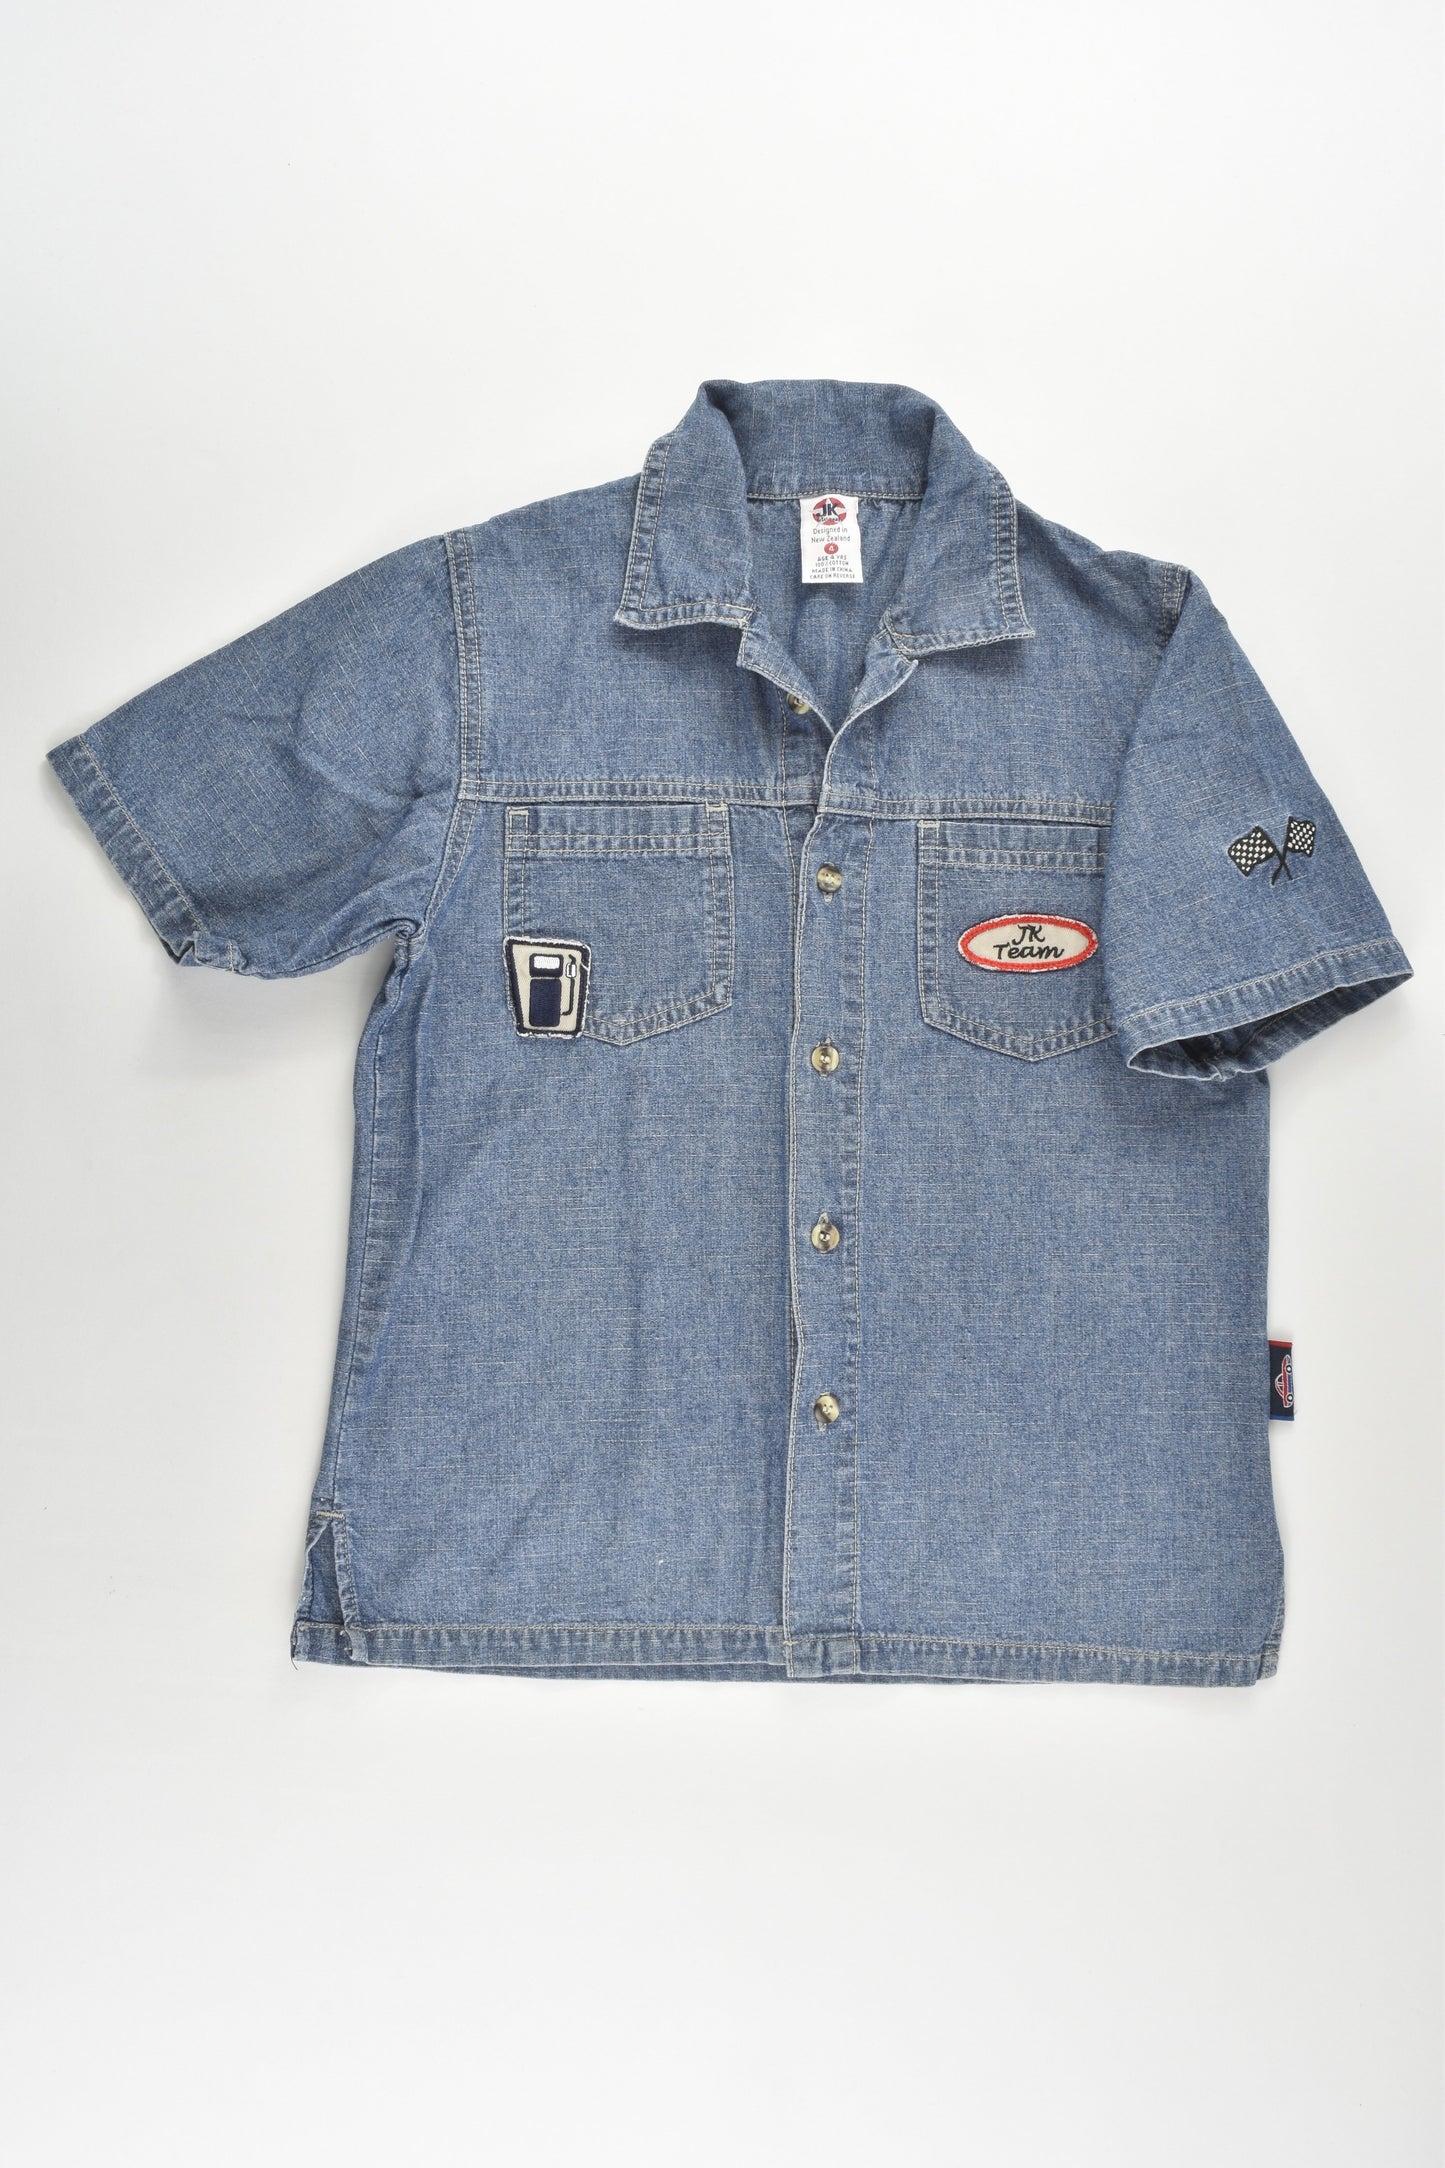 JK Kidswear (NZ) Size 4 (Generous sizing) Old School Denim Shirt